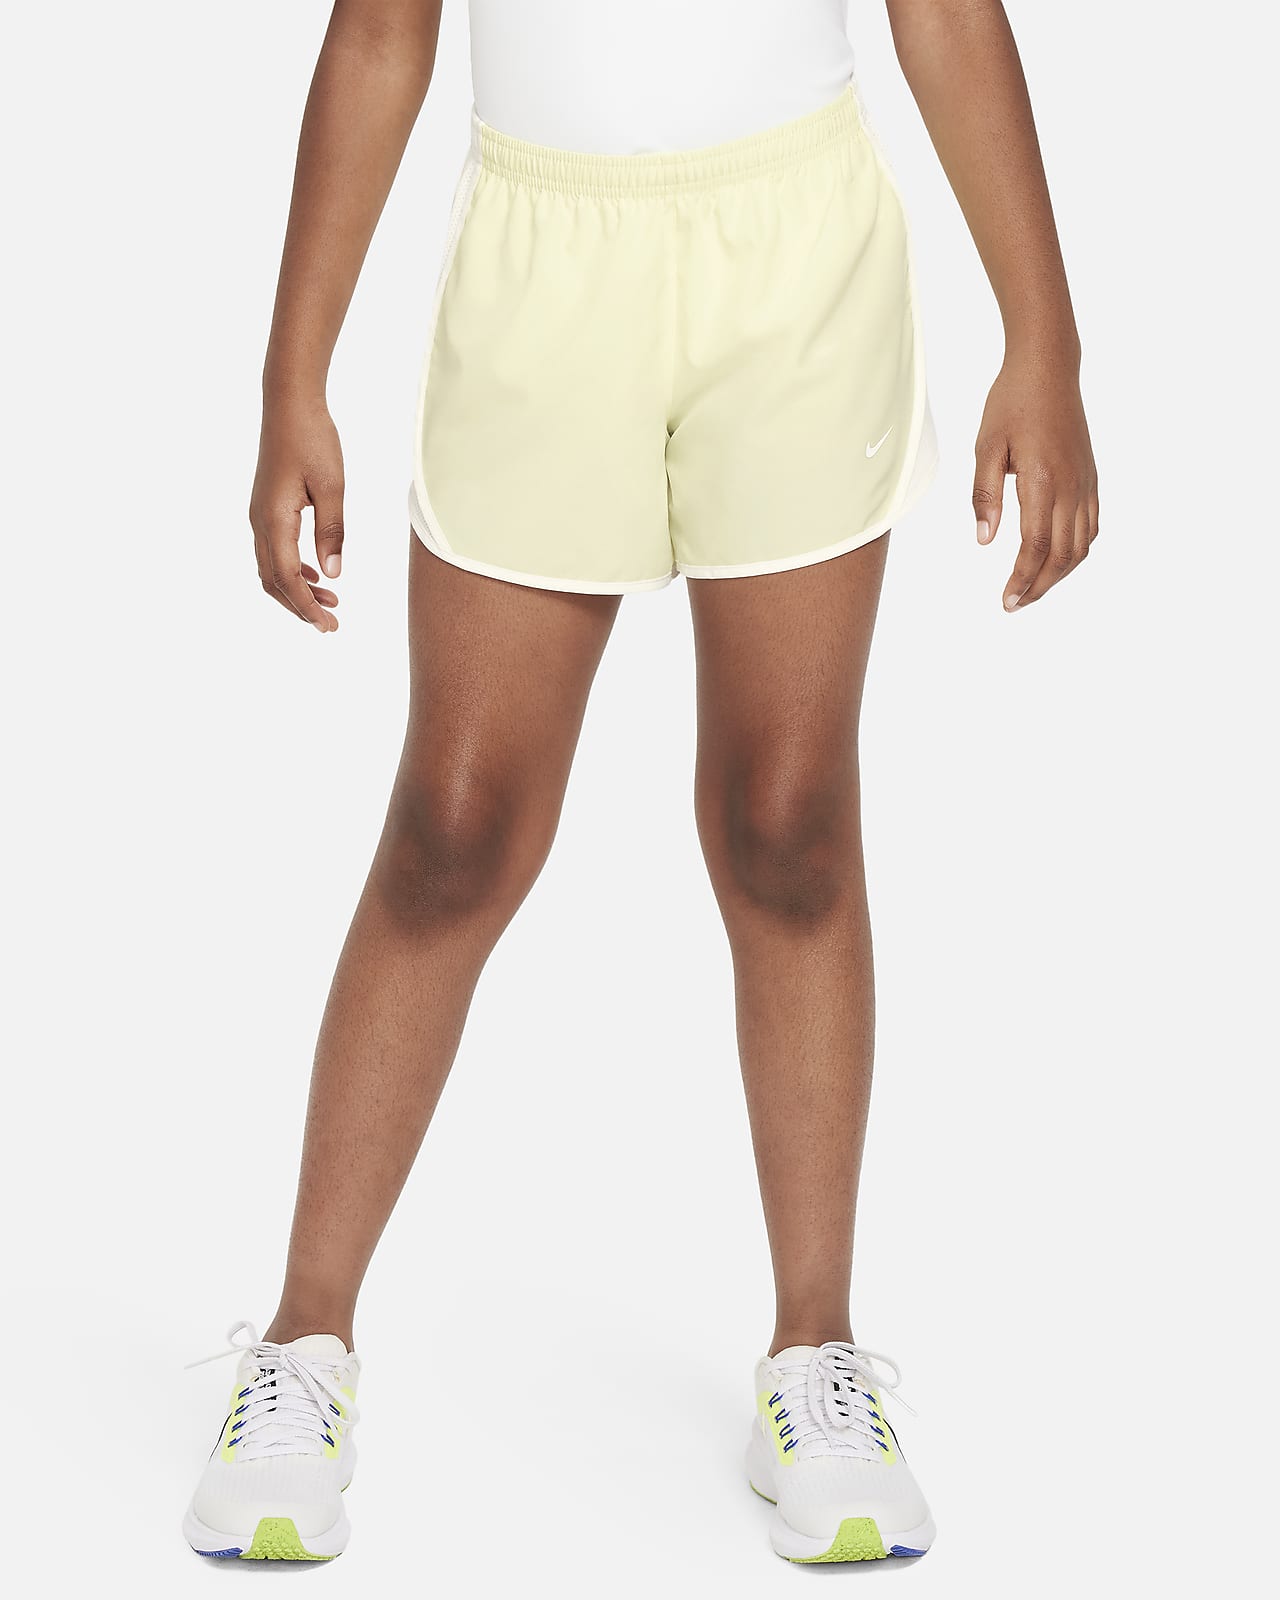 Nike Dry Girls Blue & Pink Dri-fit Running Track Athletic Shorts